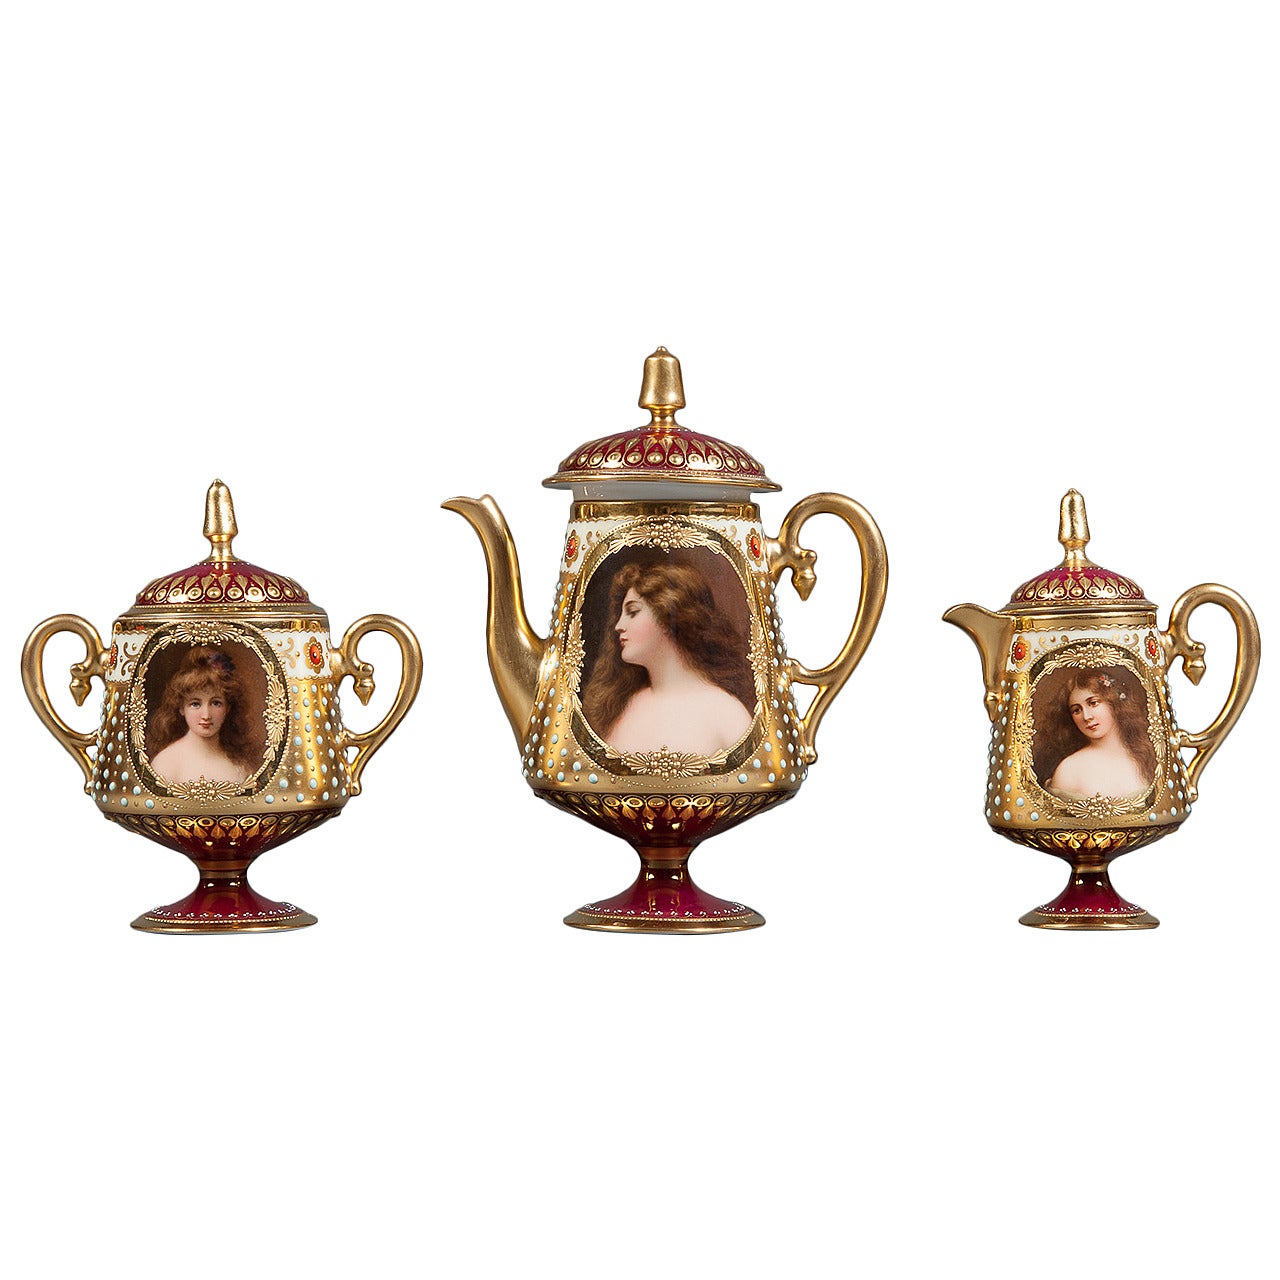 Three-Piece Dresden Hand-Painted Jeweled Coffee Set Depicting Three Beauties